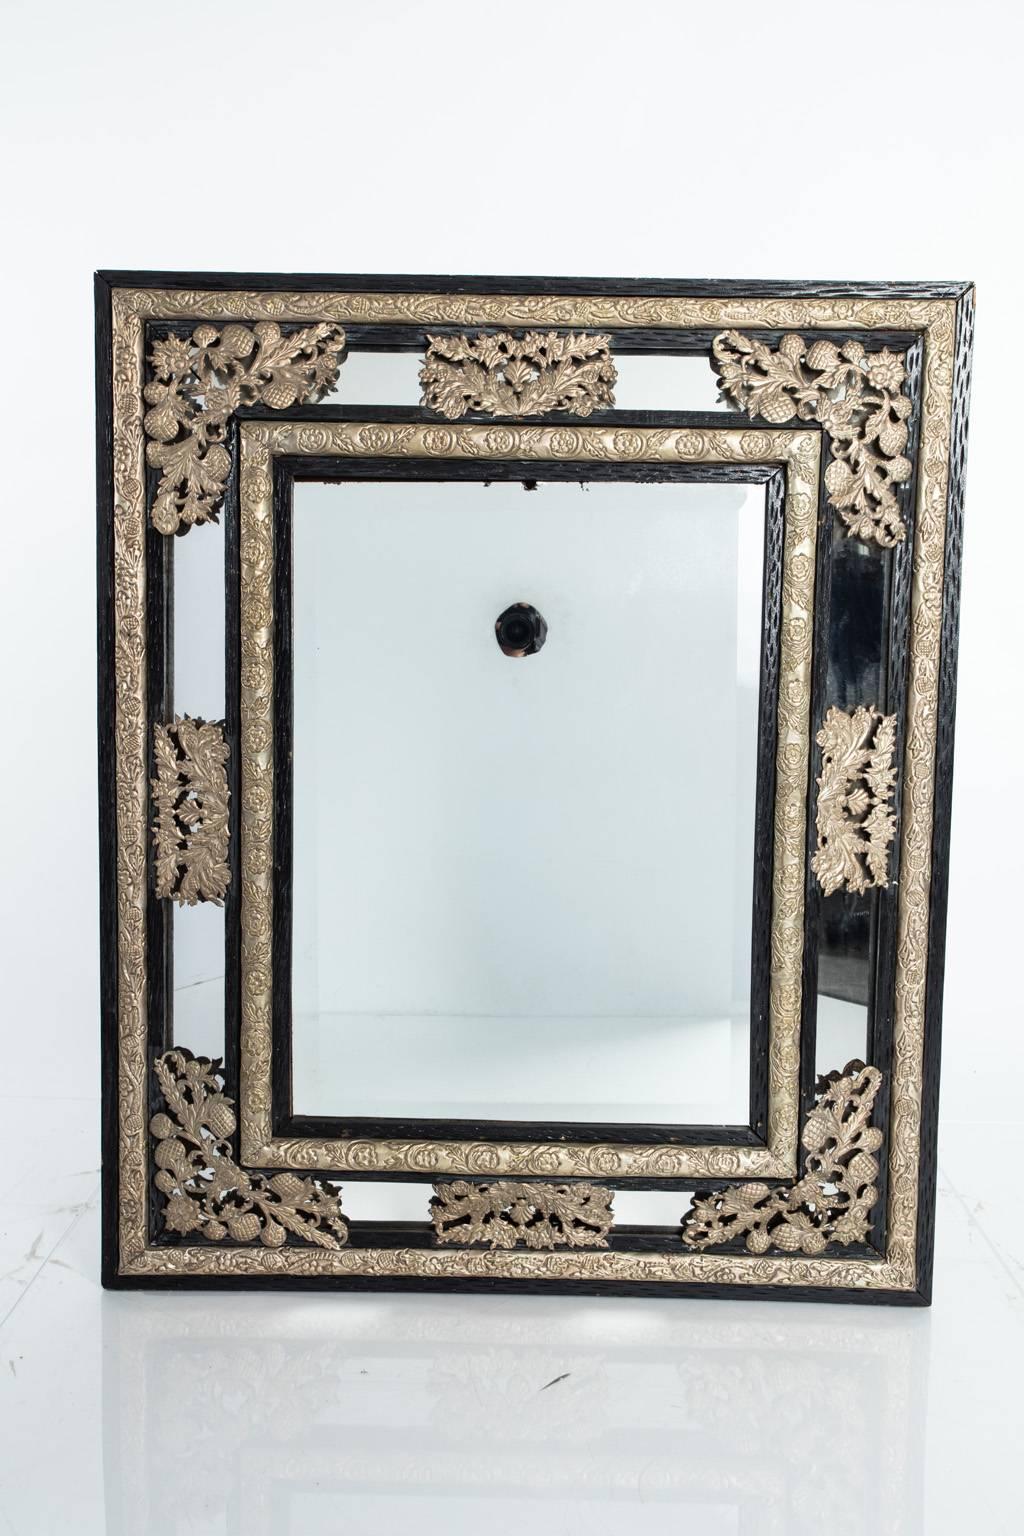 19th century Dutch mirror with wonderful nickel over brass repoussage details.